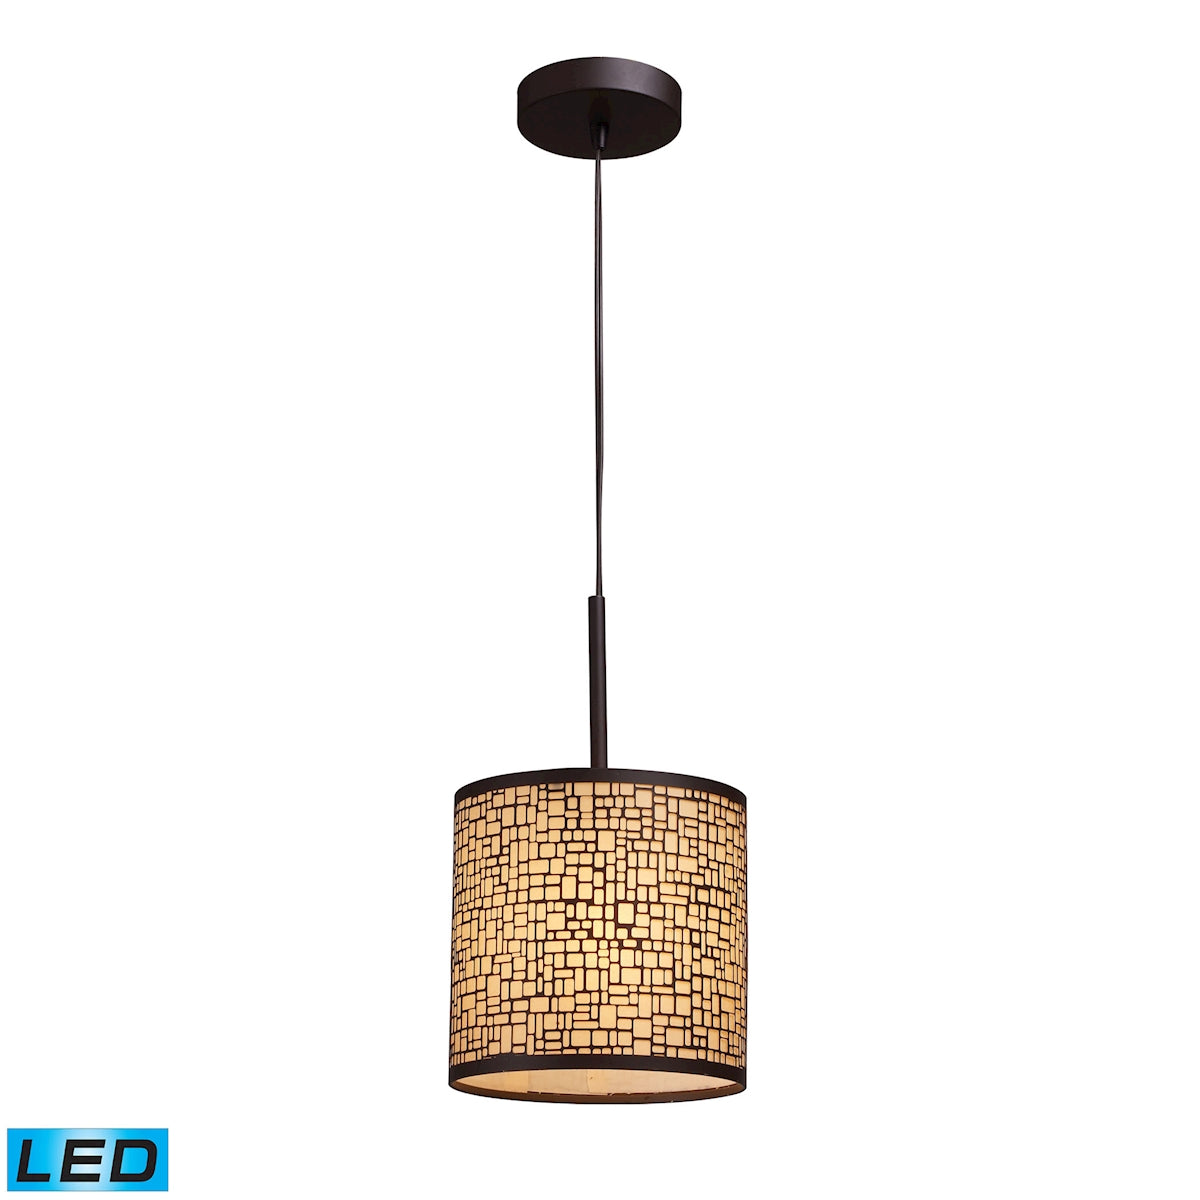 ELK Lighting 31045/1-LED Medina 1-Light Mini Pendant in Aged Bronze with Amber Glass - Includes LED Bulb